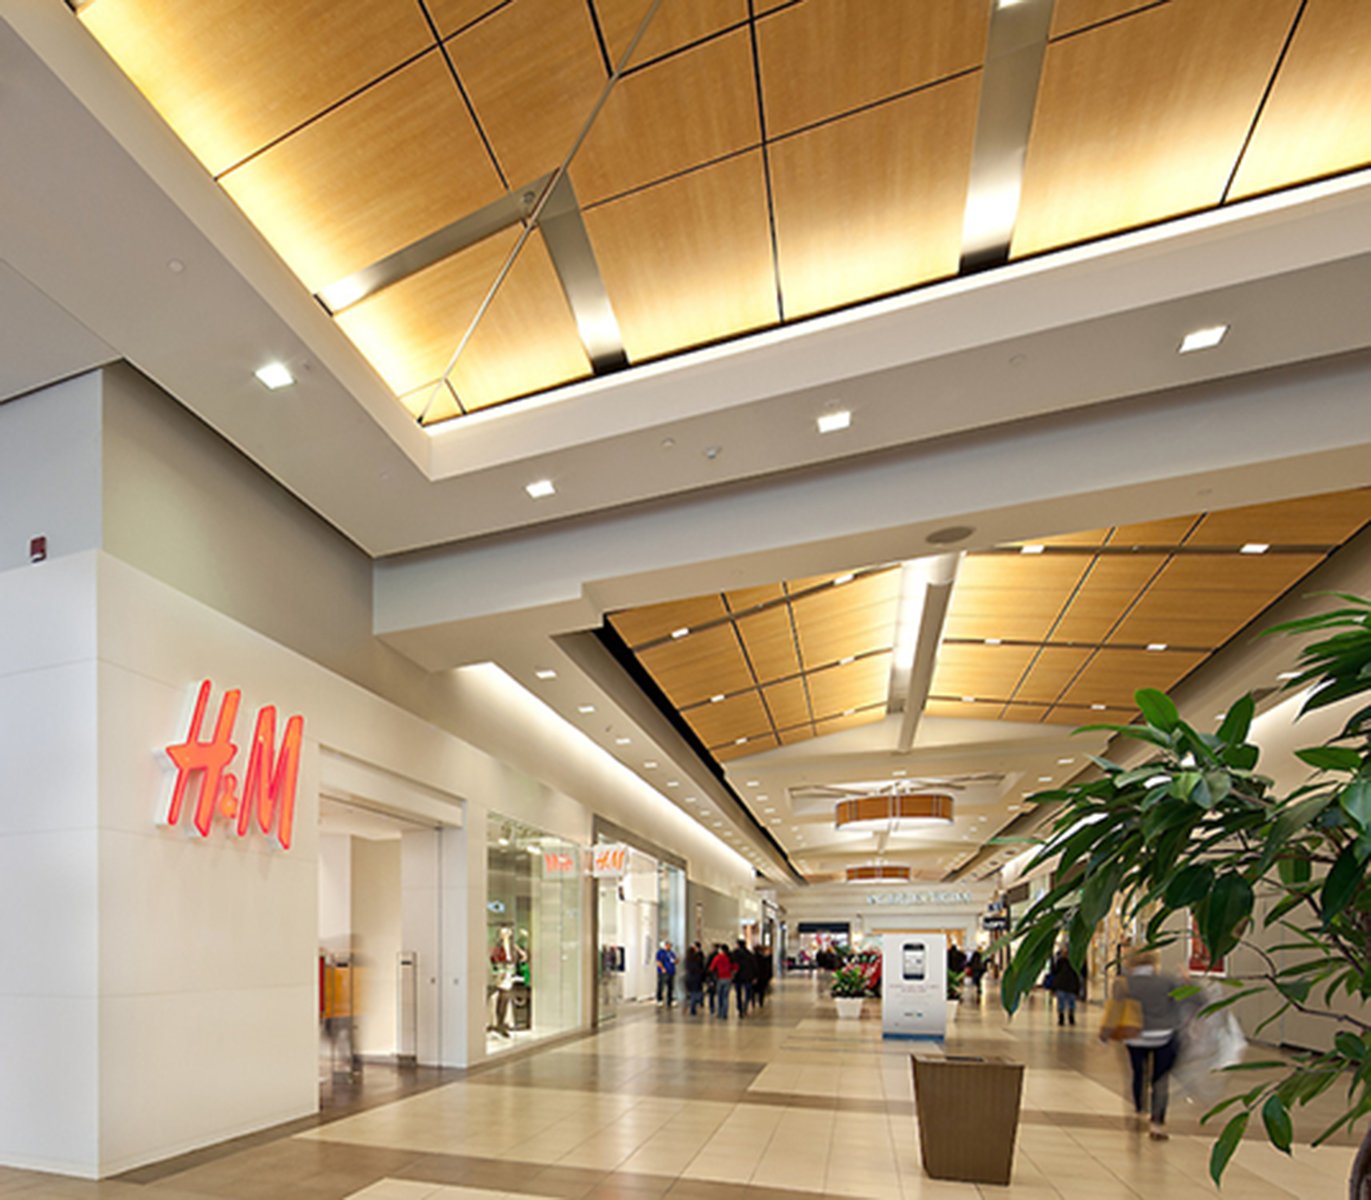 Mall ceiling design